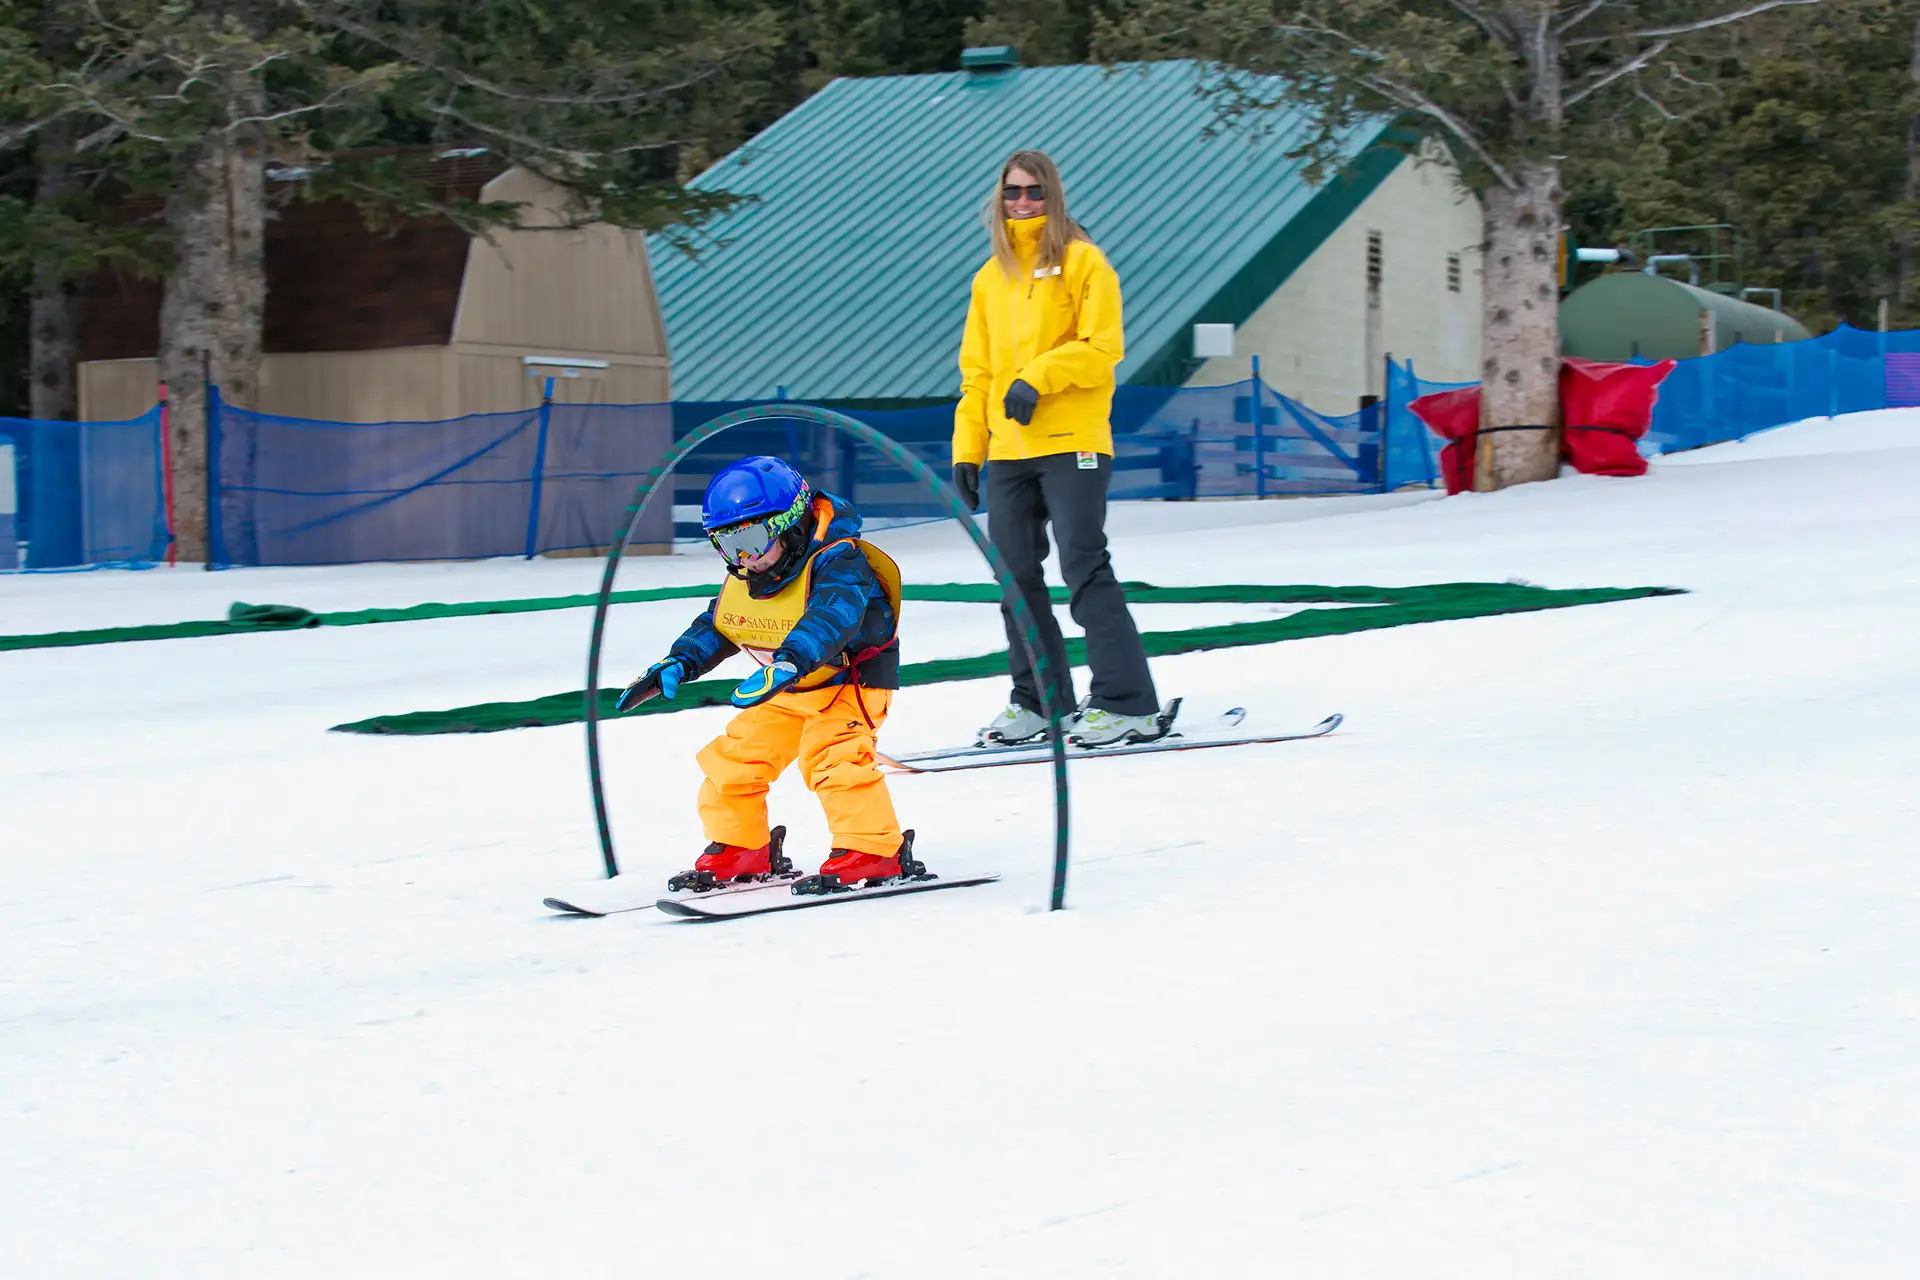 A little one learning how to ski at Ski Santa Fe in New Mexico.; Courtesy of Ski Santa Fe